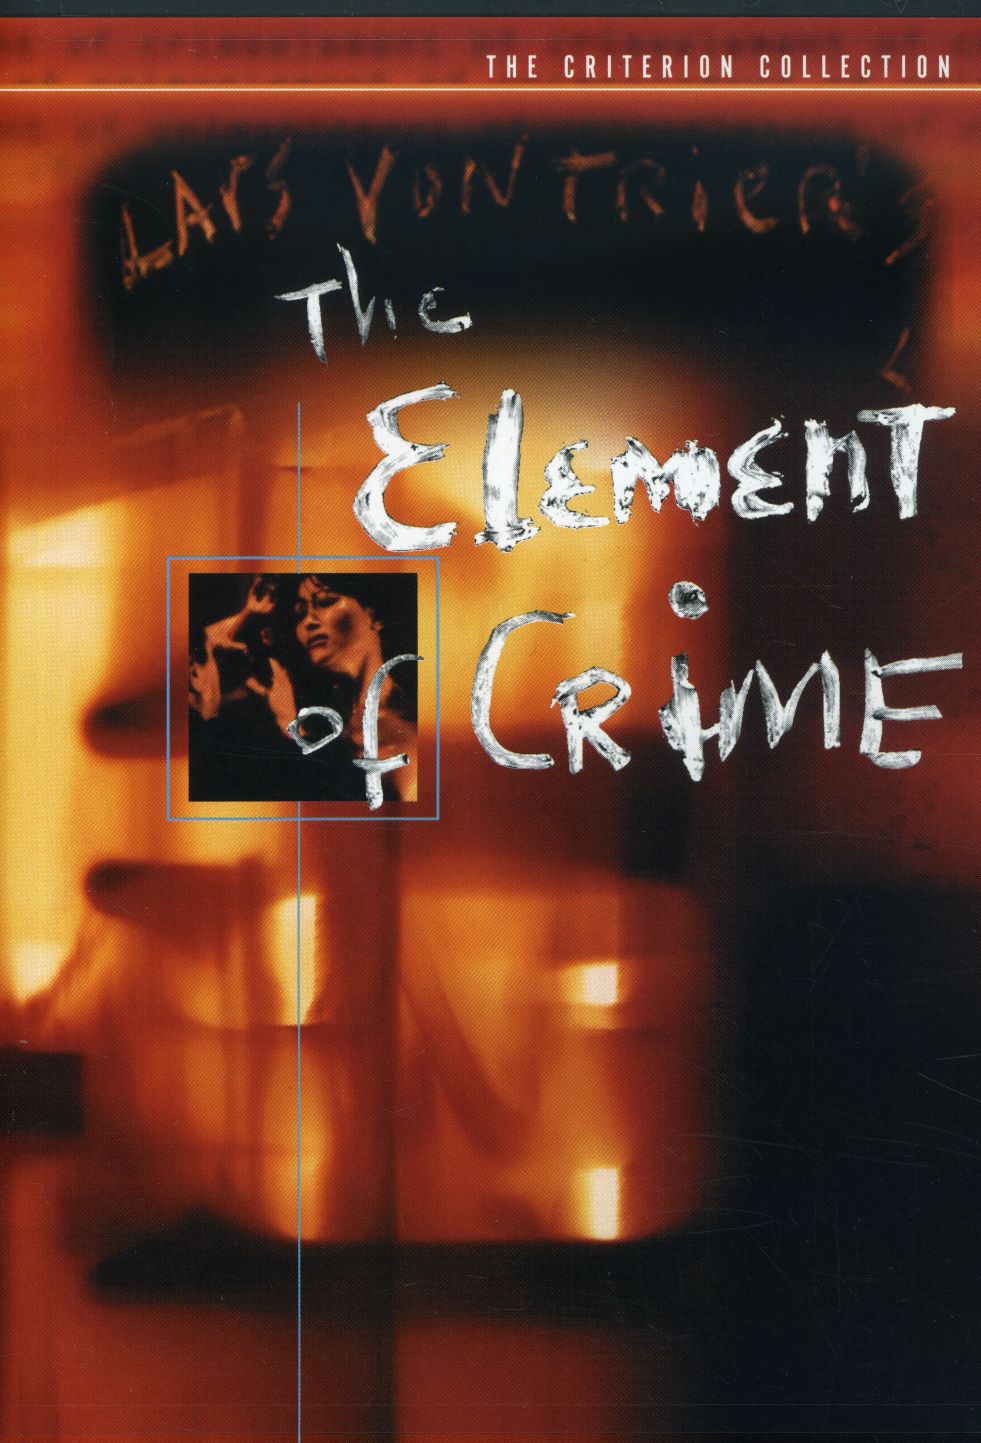 ELEMENT OF CRIME/DVD